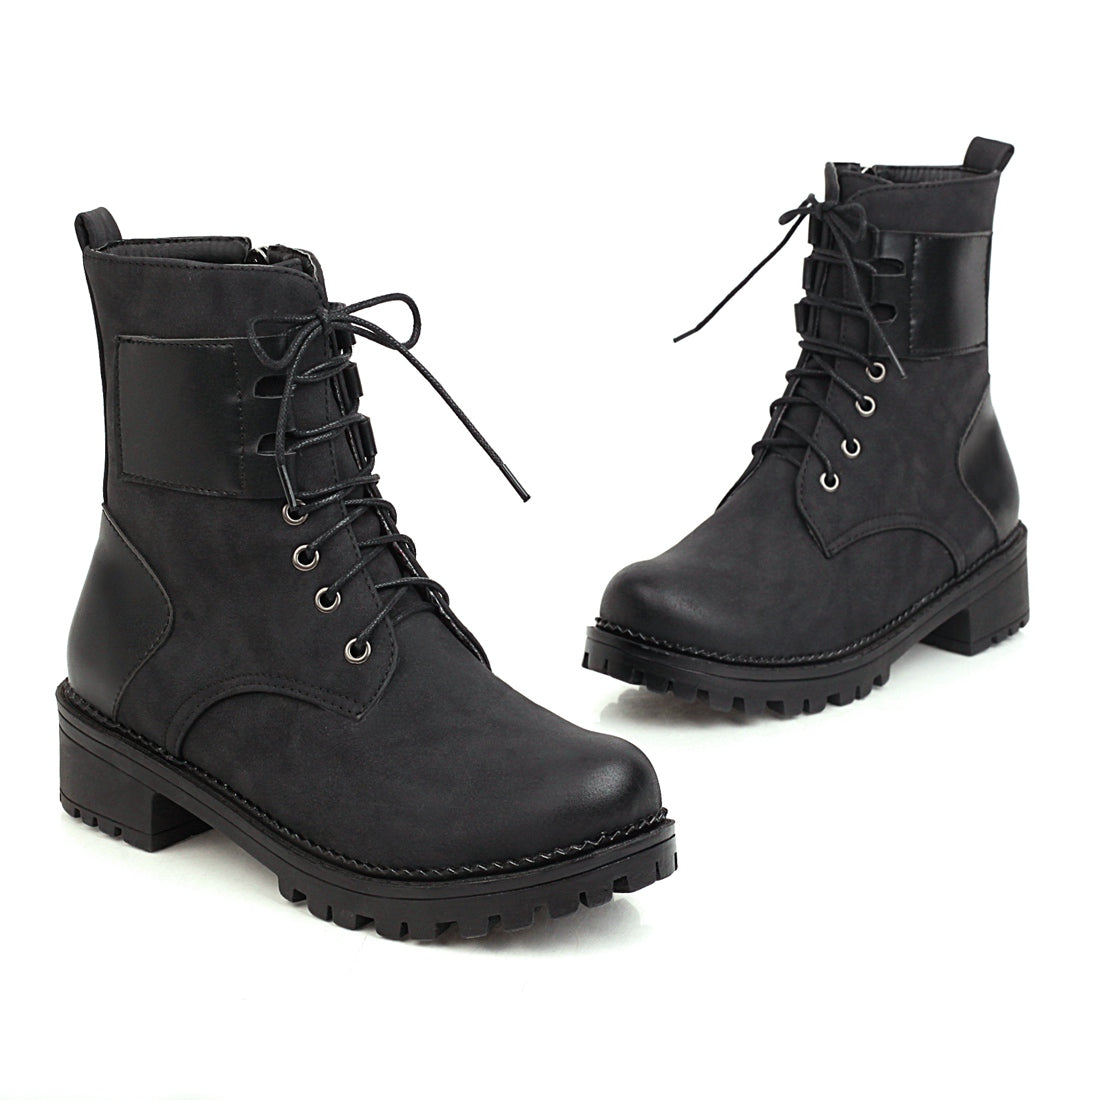 Bigsizeheels Colorblock retro fashion Martin boots - Black freeshipping - bigsizeheel®-size5-size15 -All Plus Sizes Available!